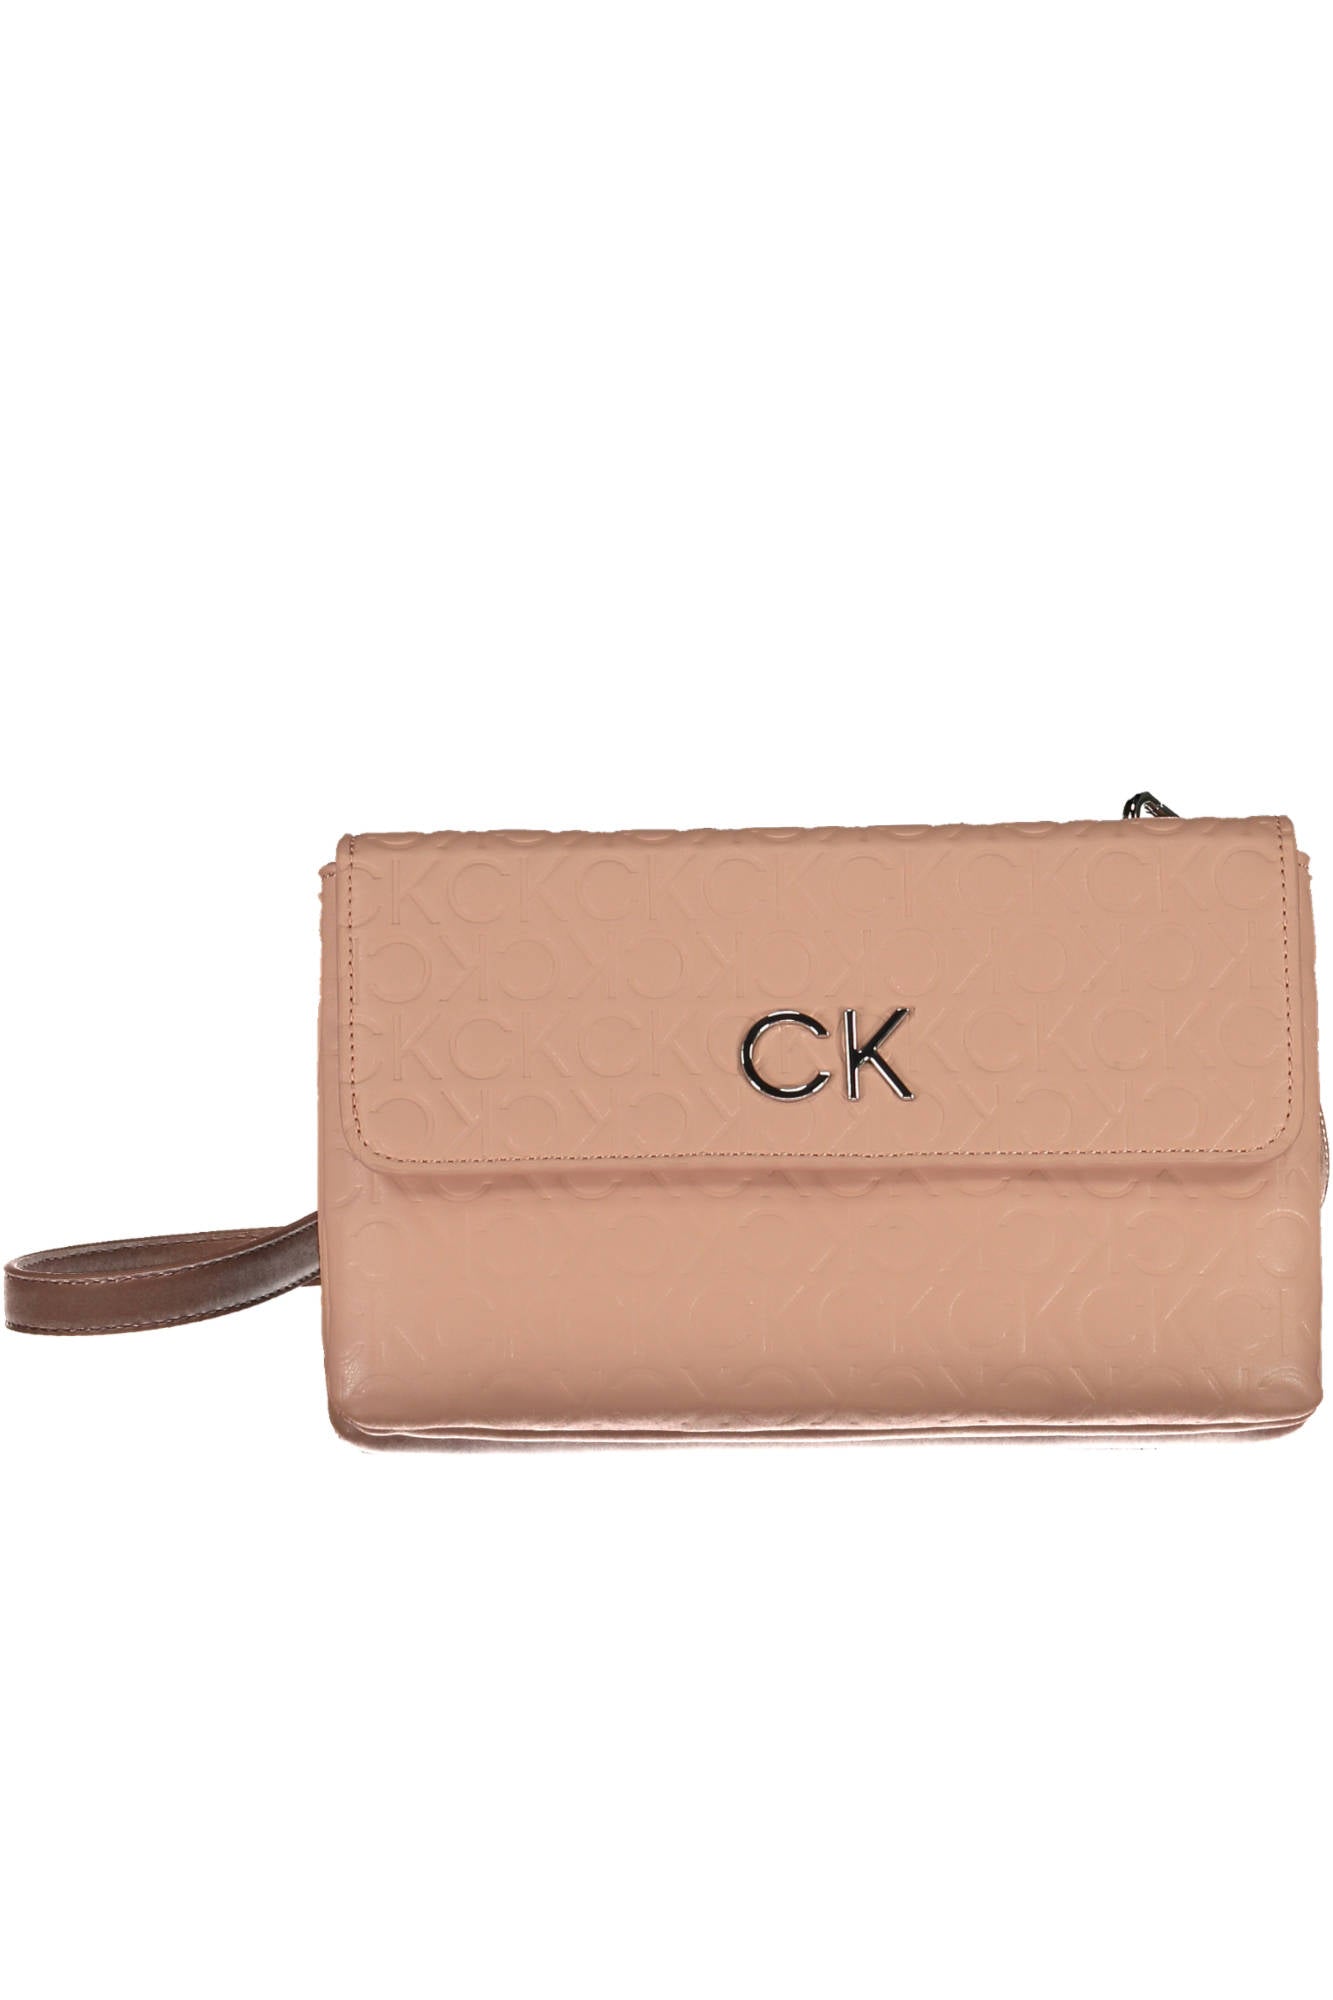 Calvin Klein Logo Jacquard Studio Dome Satchel Purse Handbag Pink |  Accessorising - Brand Name / Designer Handbags For Carry & Wear... Share If  You Care! | Crossbody bag, Bags, Satchel purse